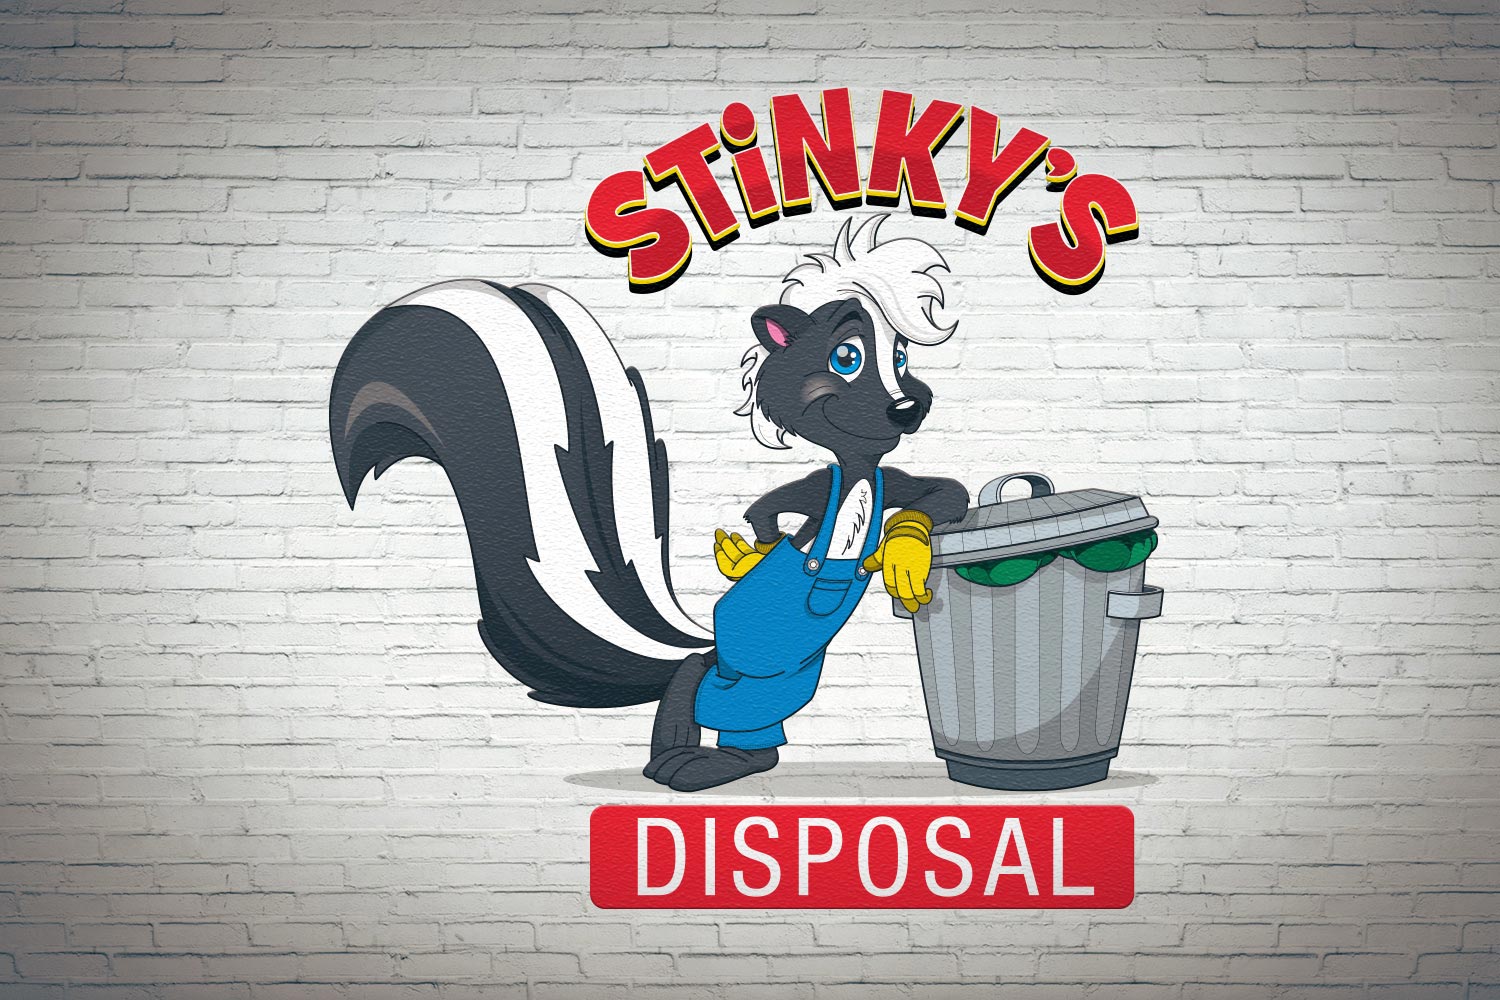 Stinky’s Disposal